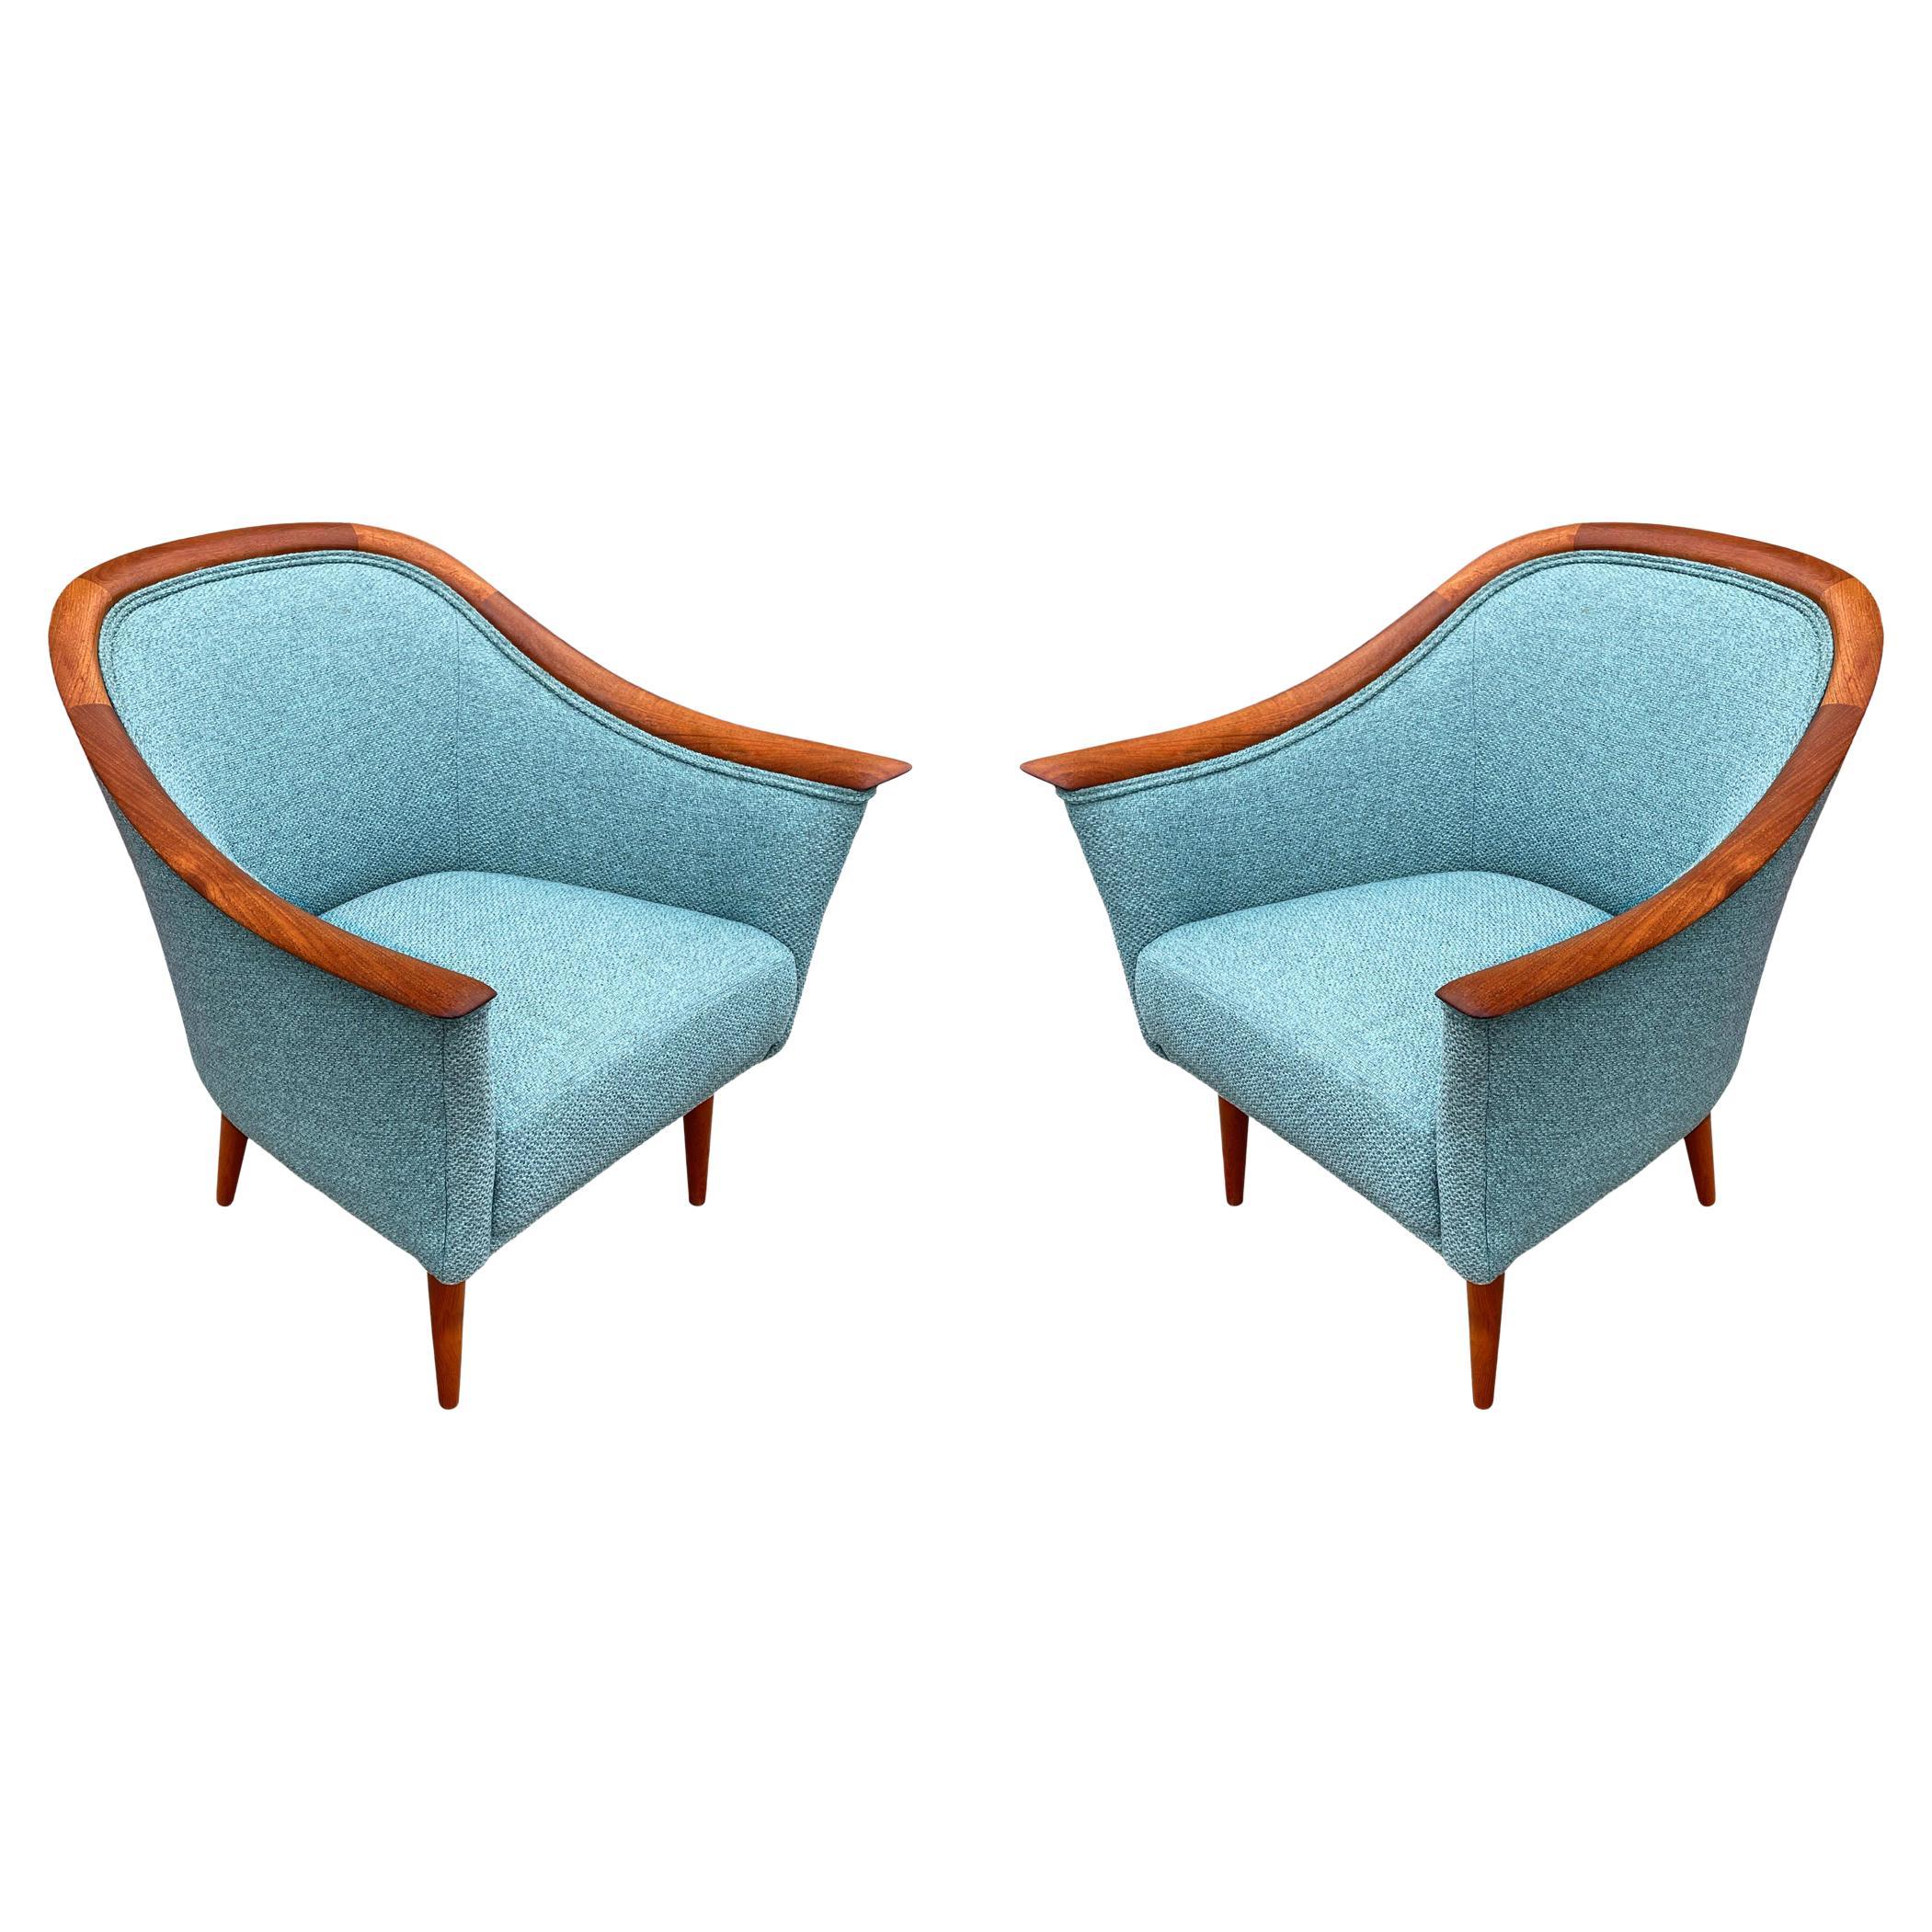 Matching Pair of Mid Century Danish Modern Lounge Chairs in Teak & Sage Tweed For Sale